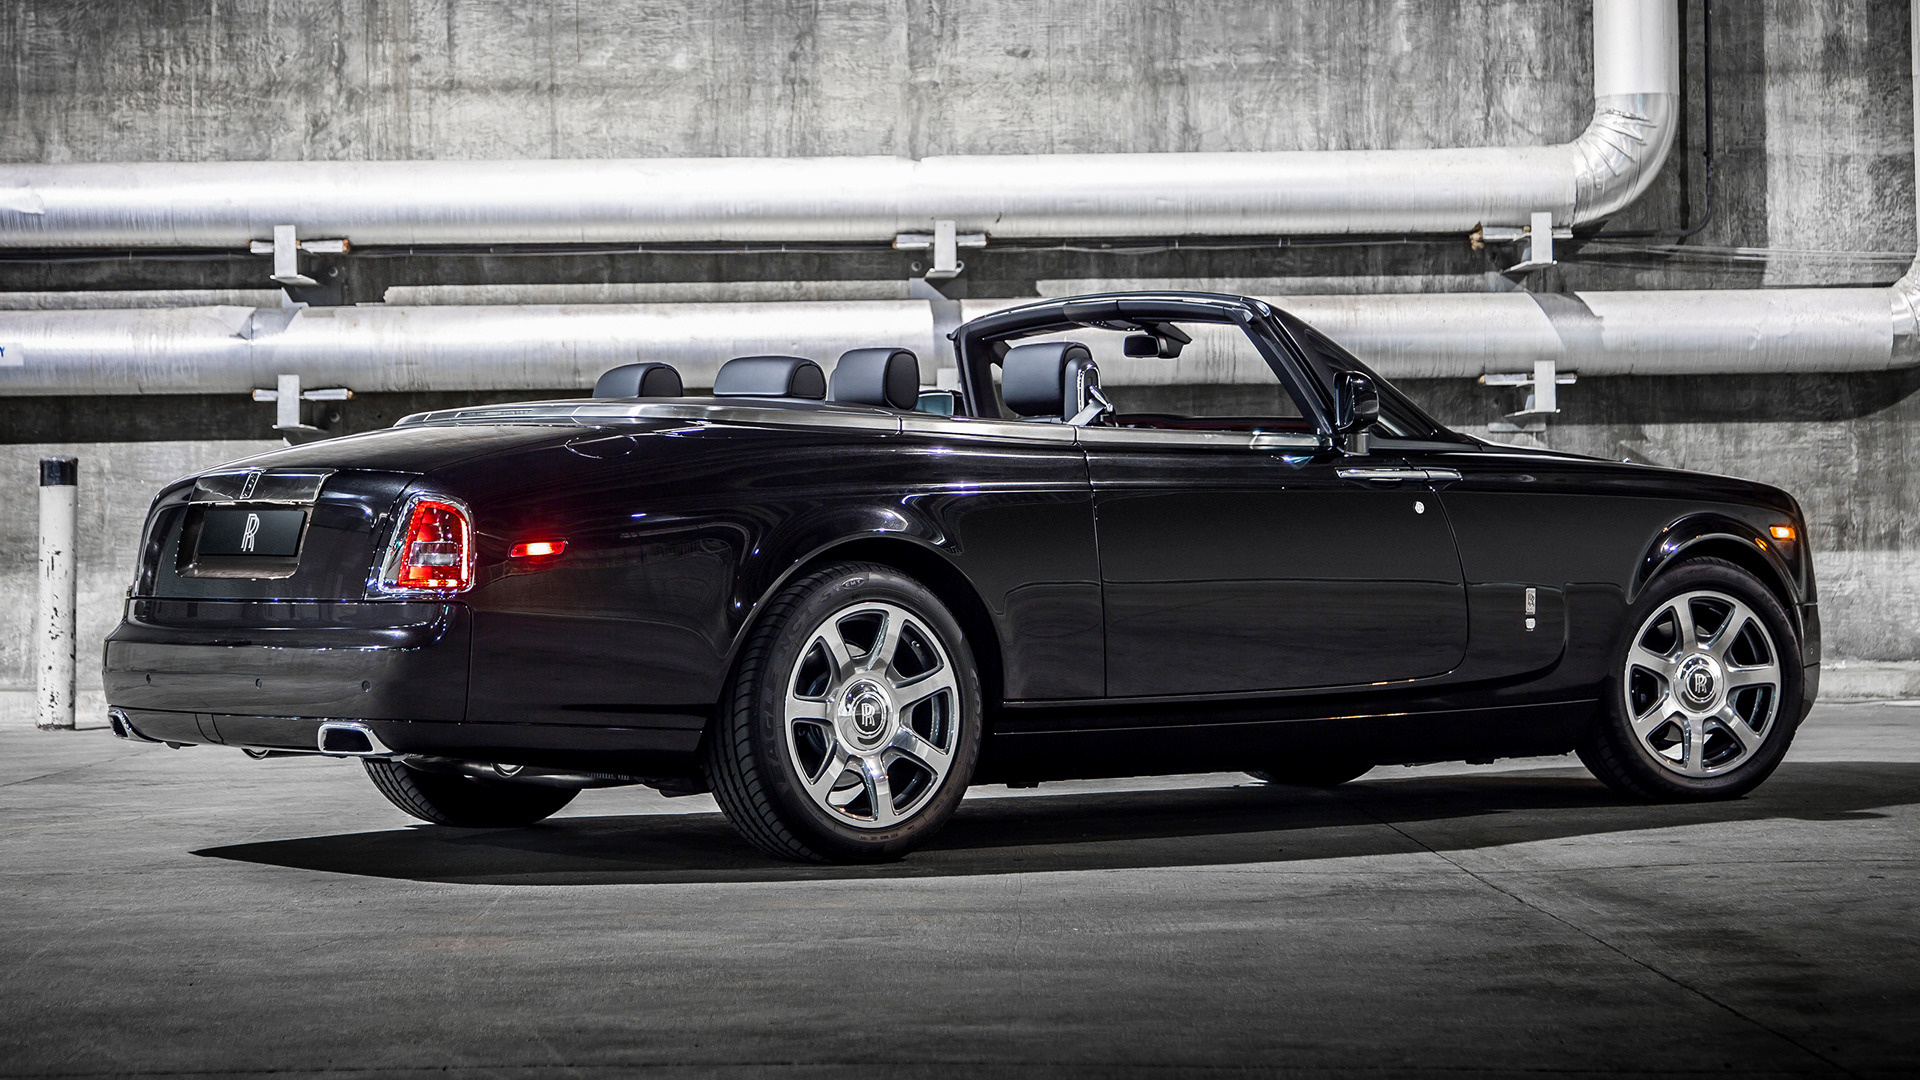 Black Car Car Convertible Full Size Car Luxury Car Rolls Royce Phantom Drophead Coupe Nighthawk 1920x1080